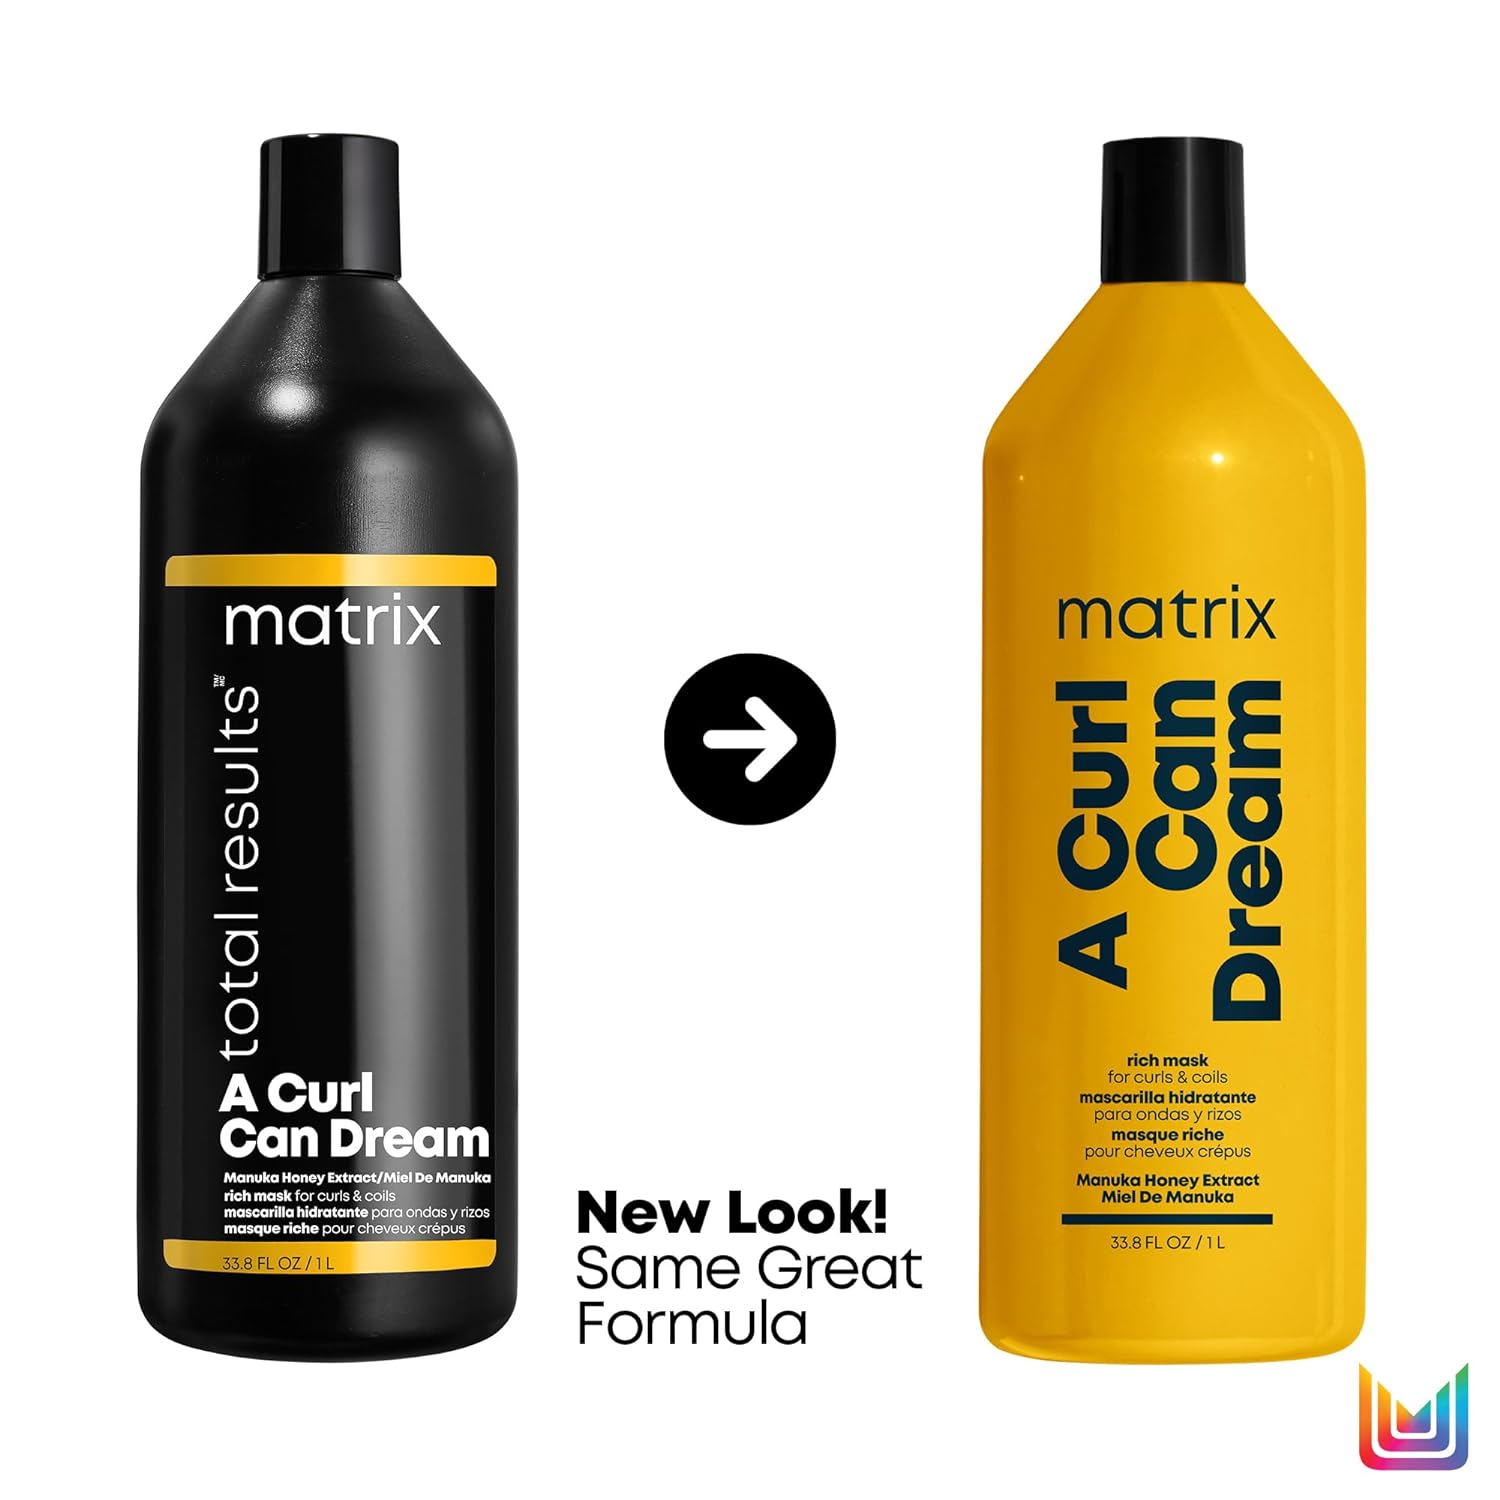 Matrix - Mascarilla Total Results a Curl Can Dream |32 oz| 